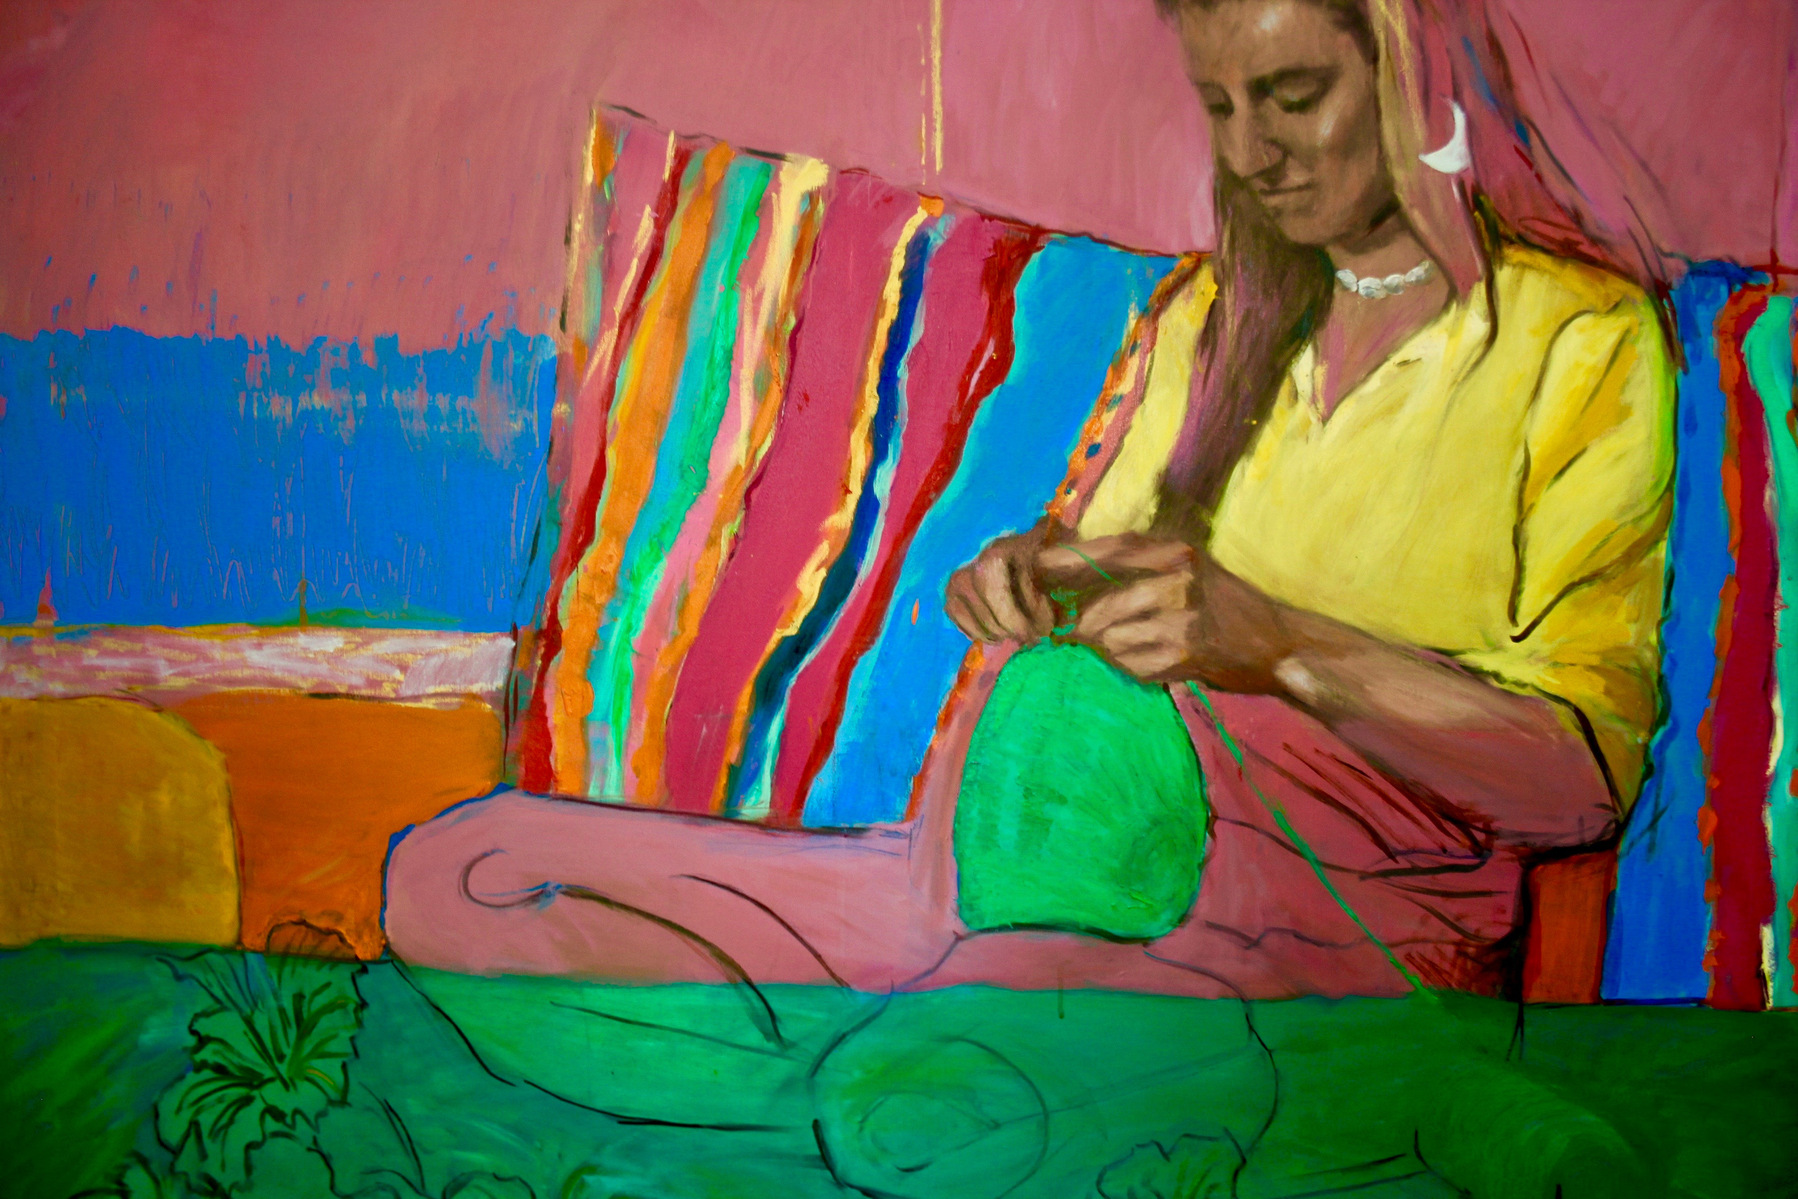 Annie-Rose Fiddian-Green
Paintings
Artist
Portraits
